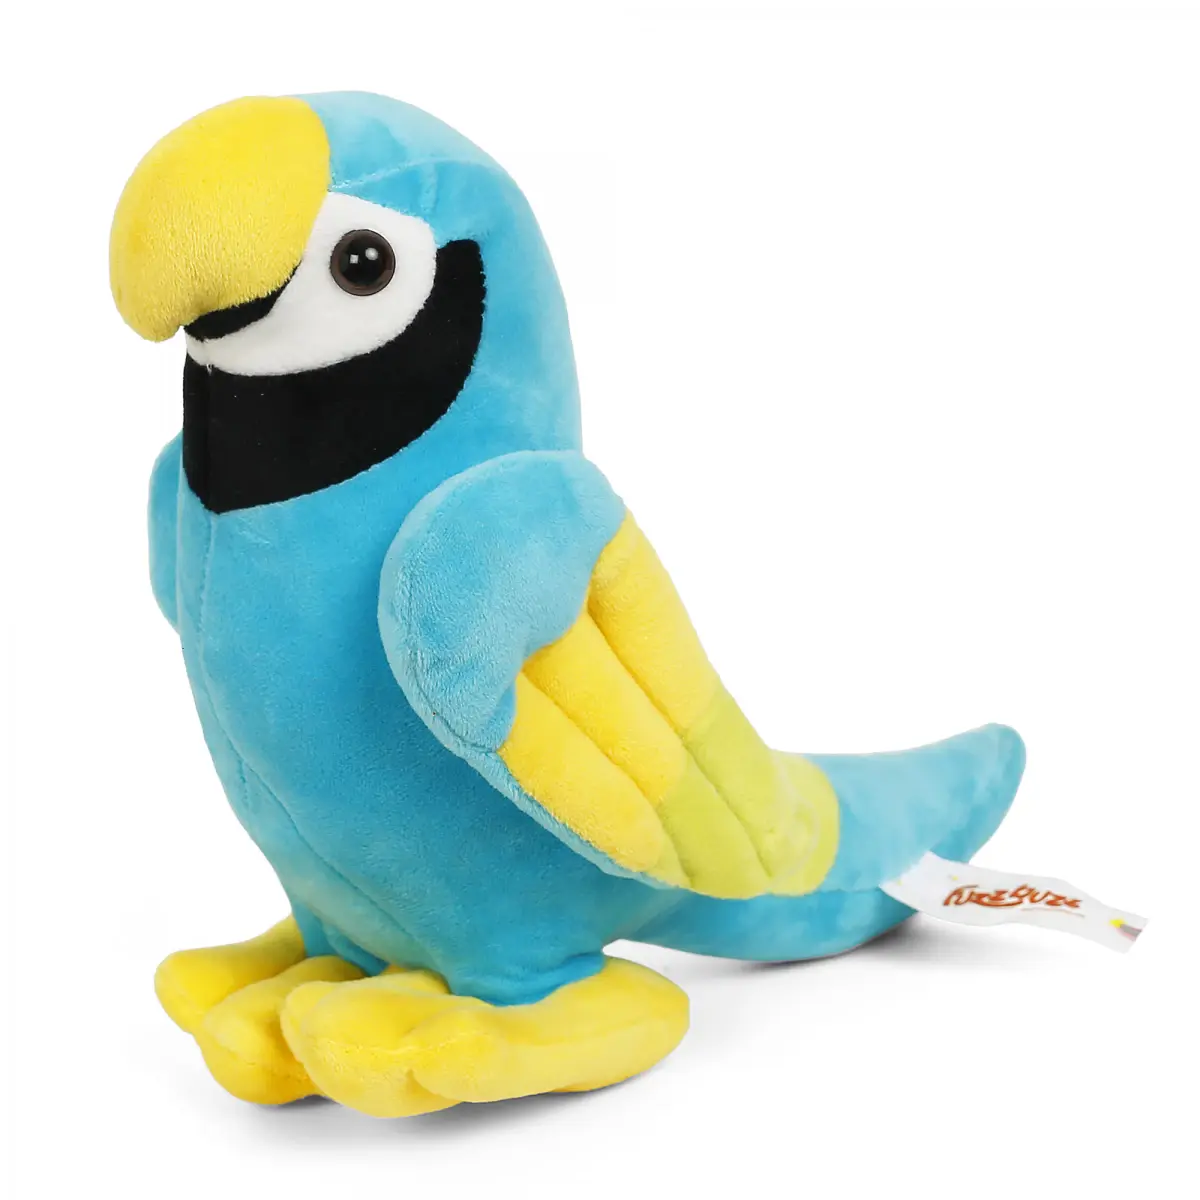 Fuzzbuzz Parrot Soft Toys for Kids, Blue, 12Y+